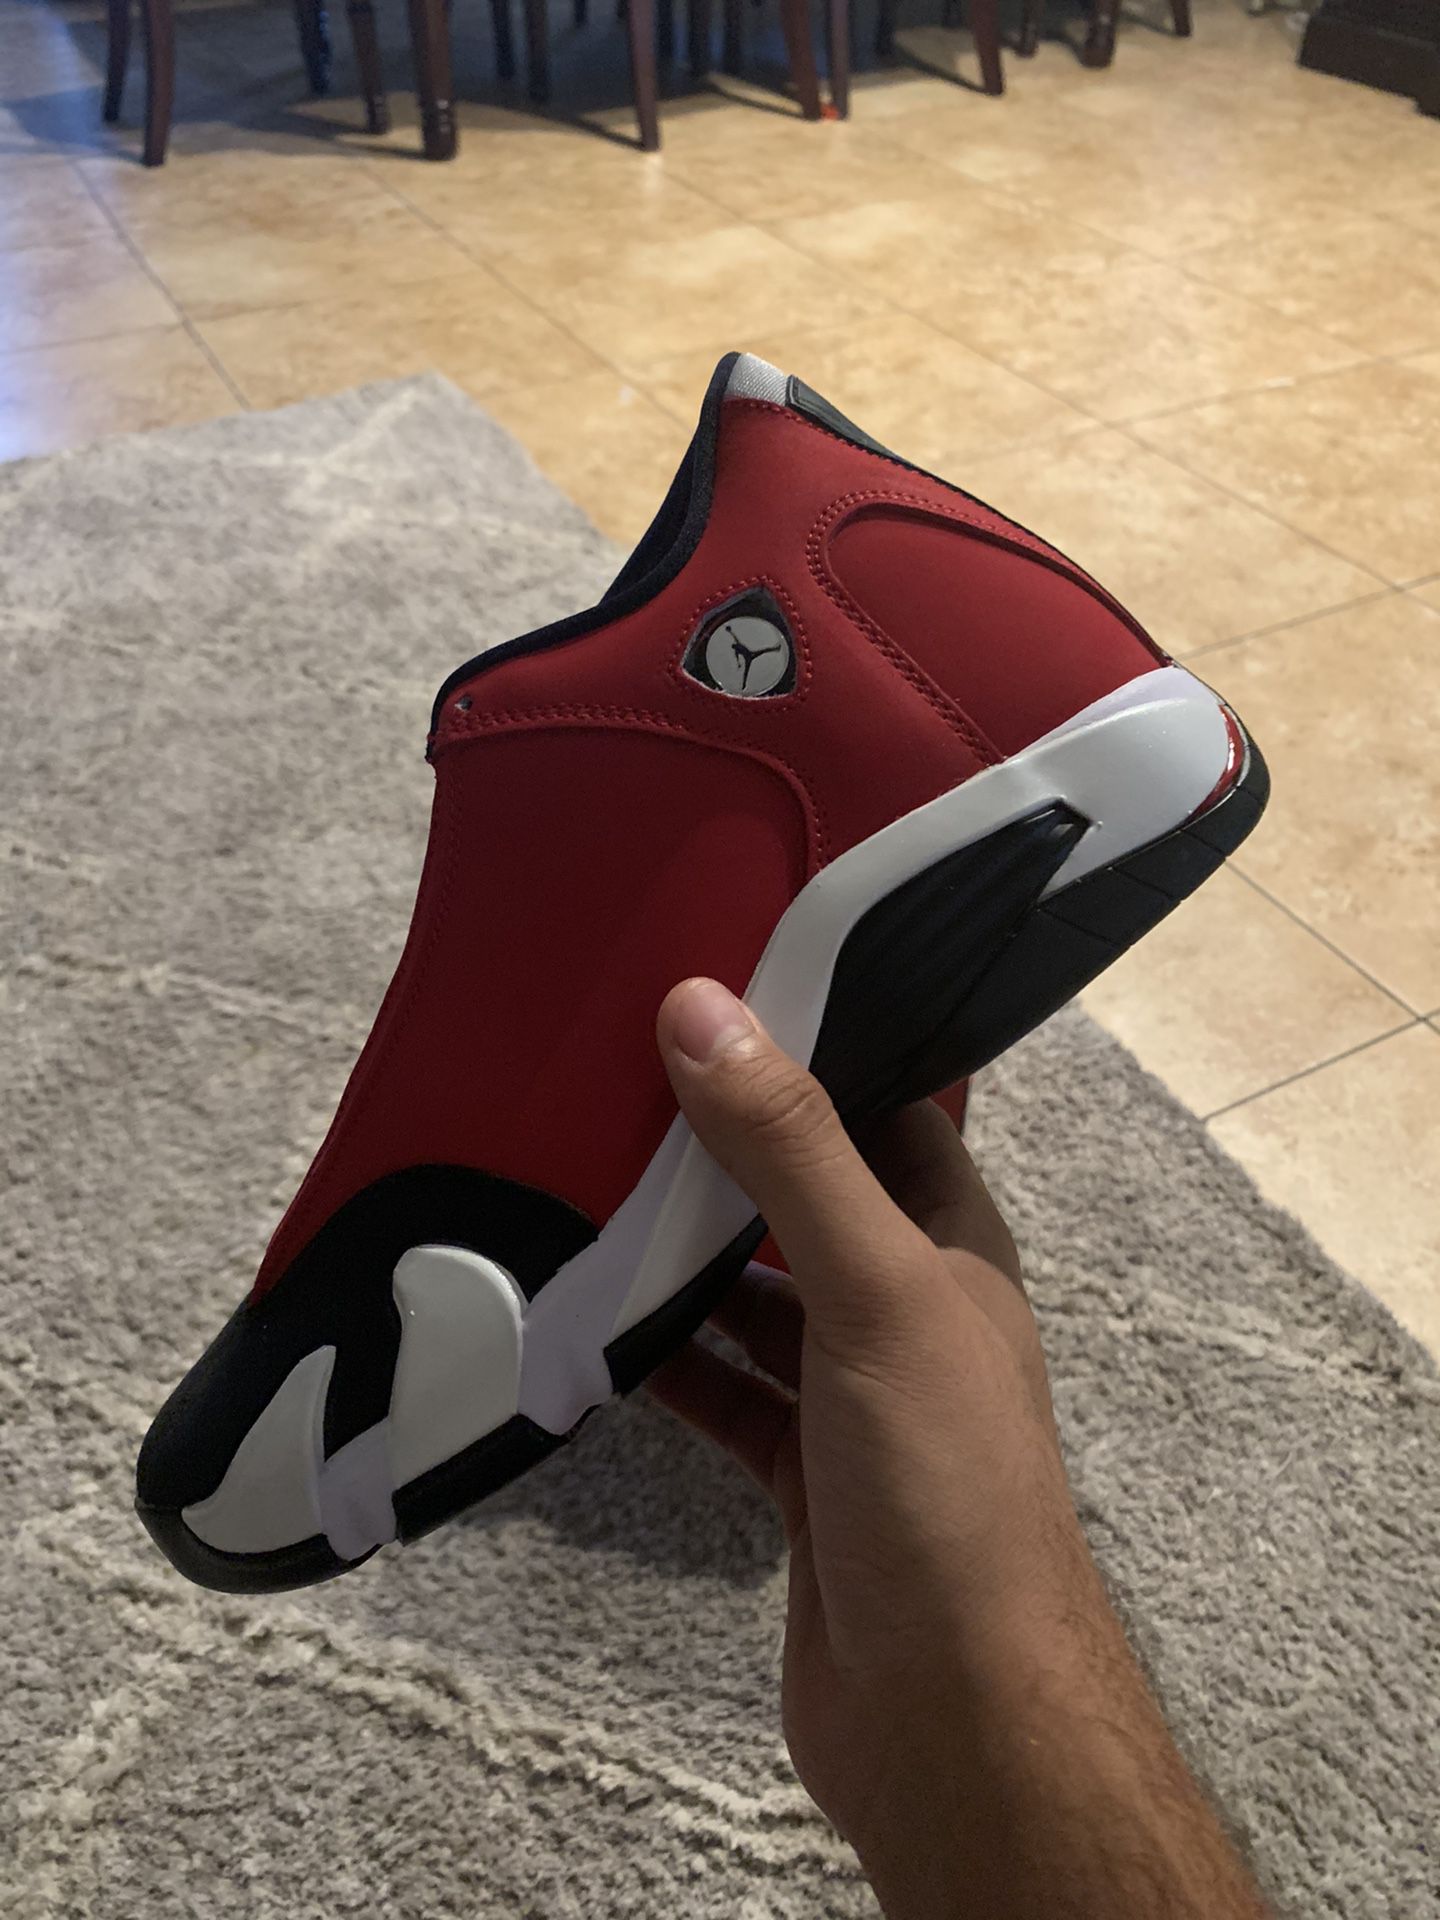 Air Jordan 14 Retro Gym Red Toro